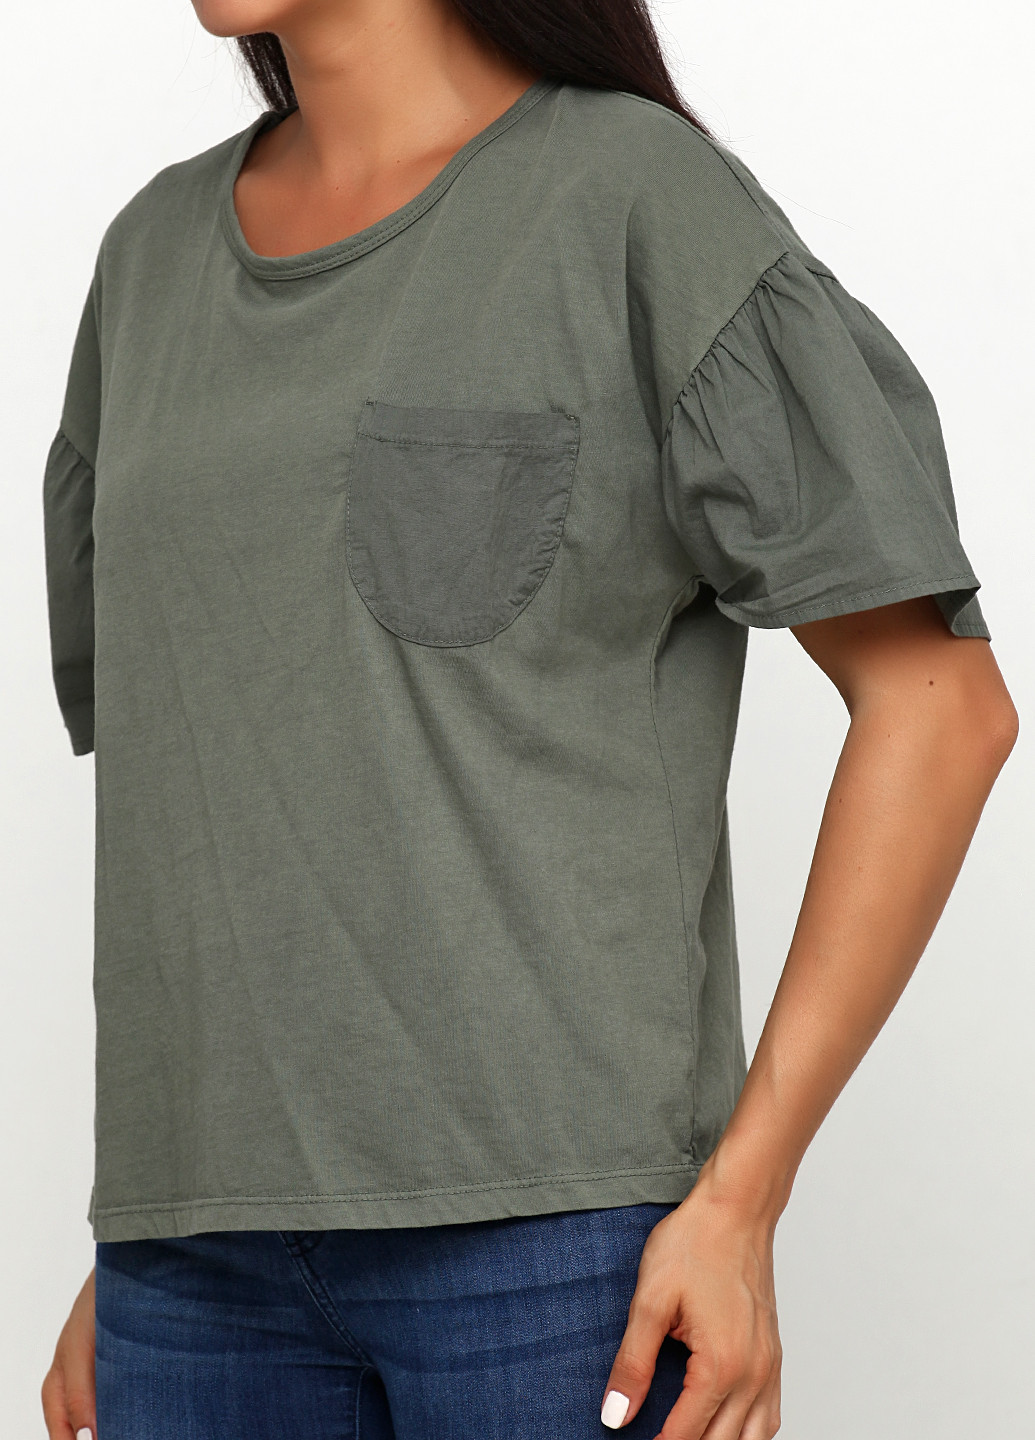 Хаки (оливковая) летняя футболка 158С